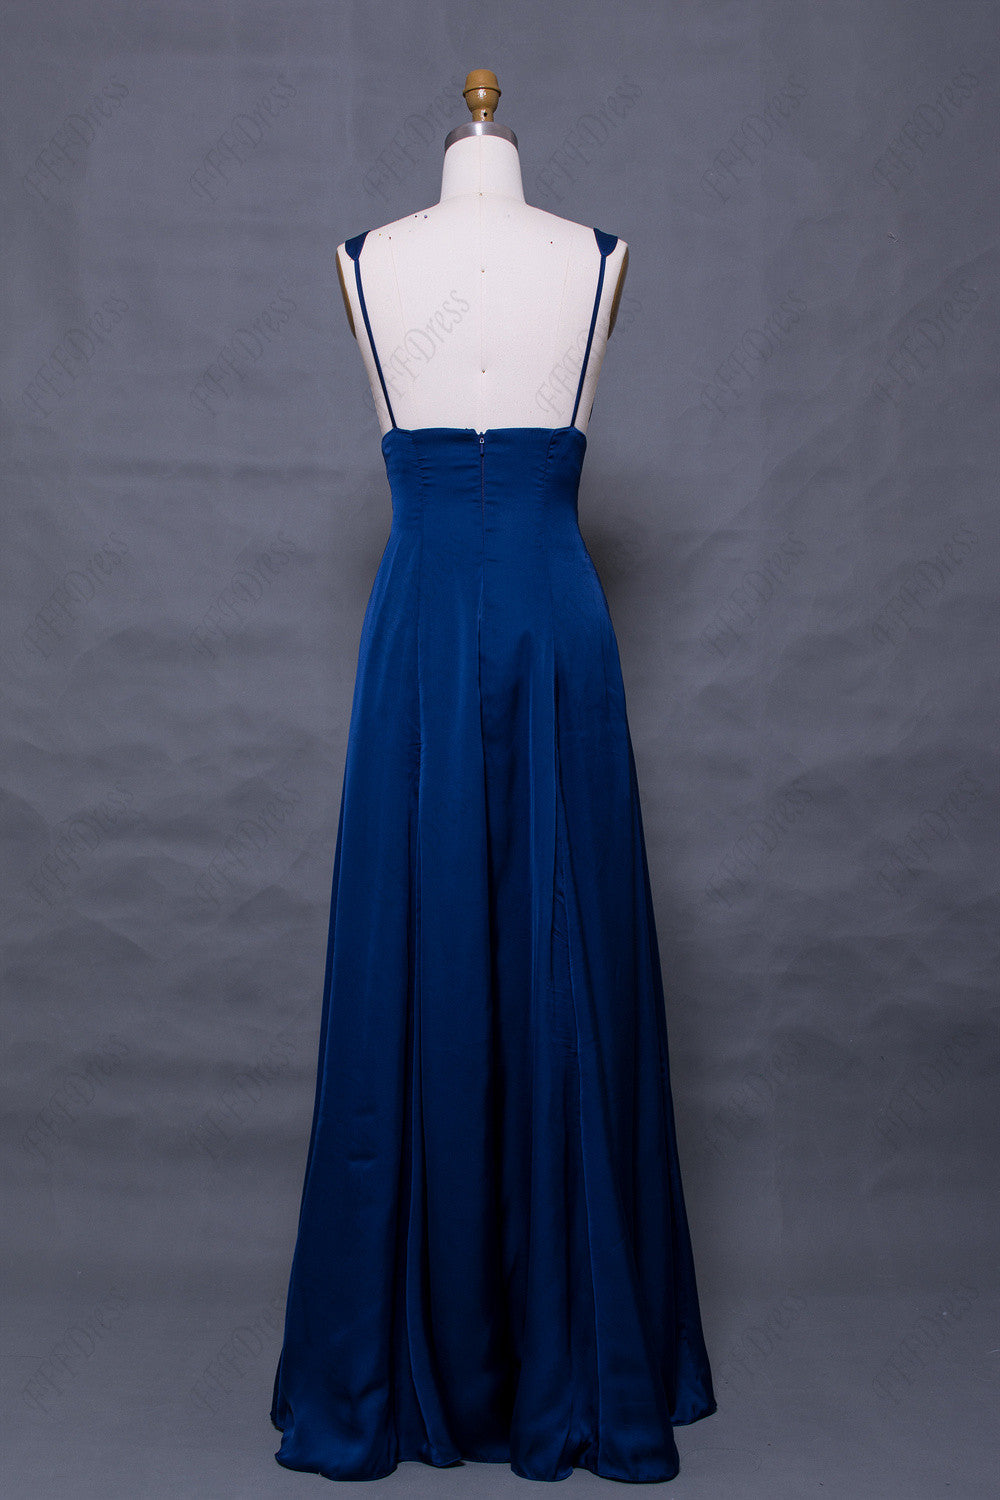 Sexy navy blue prom dresses long spaghetti straps